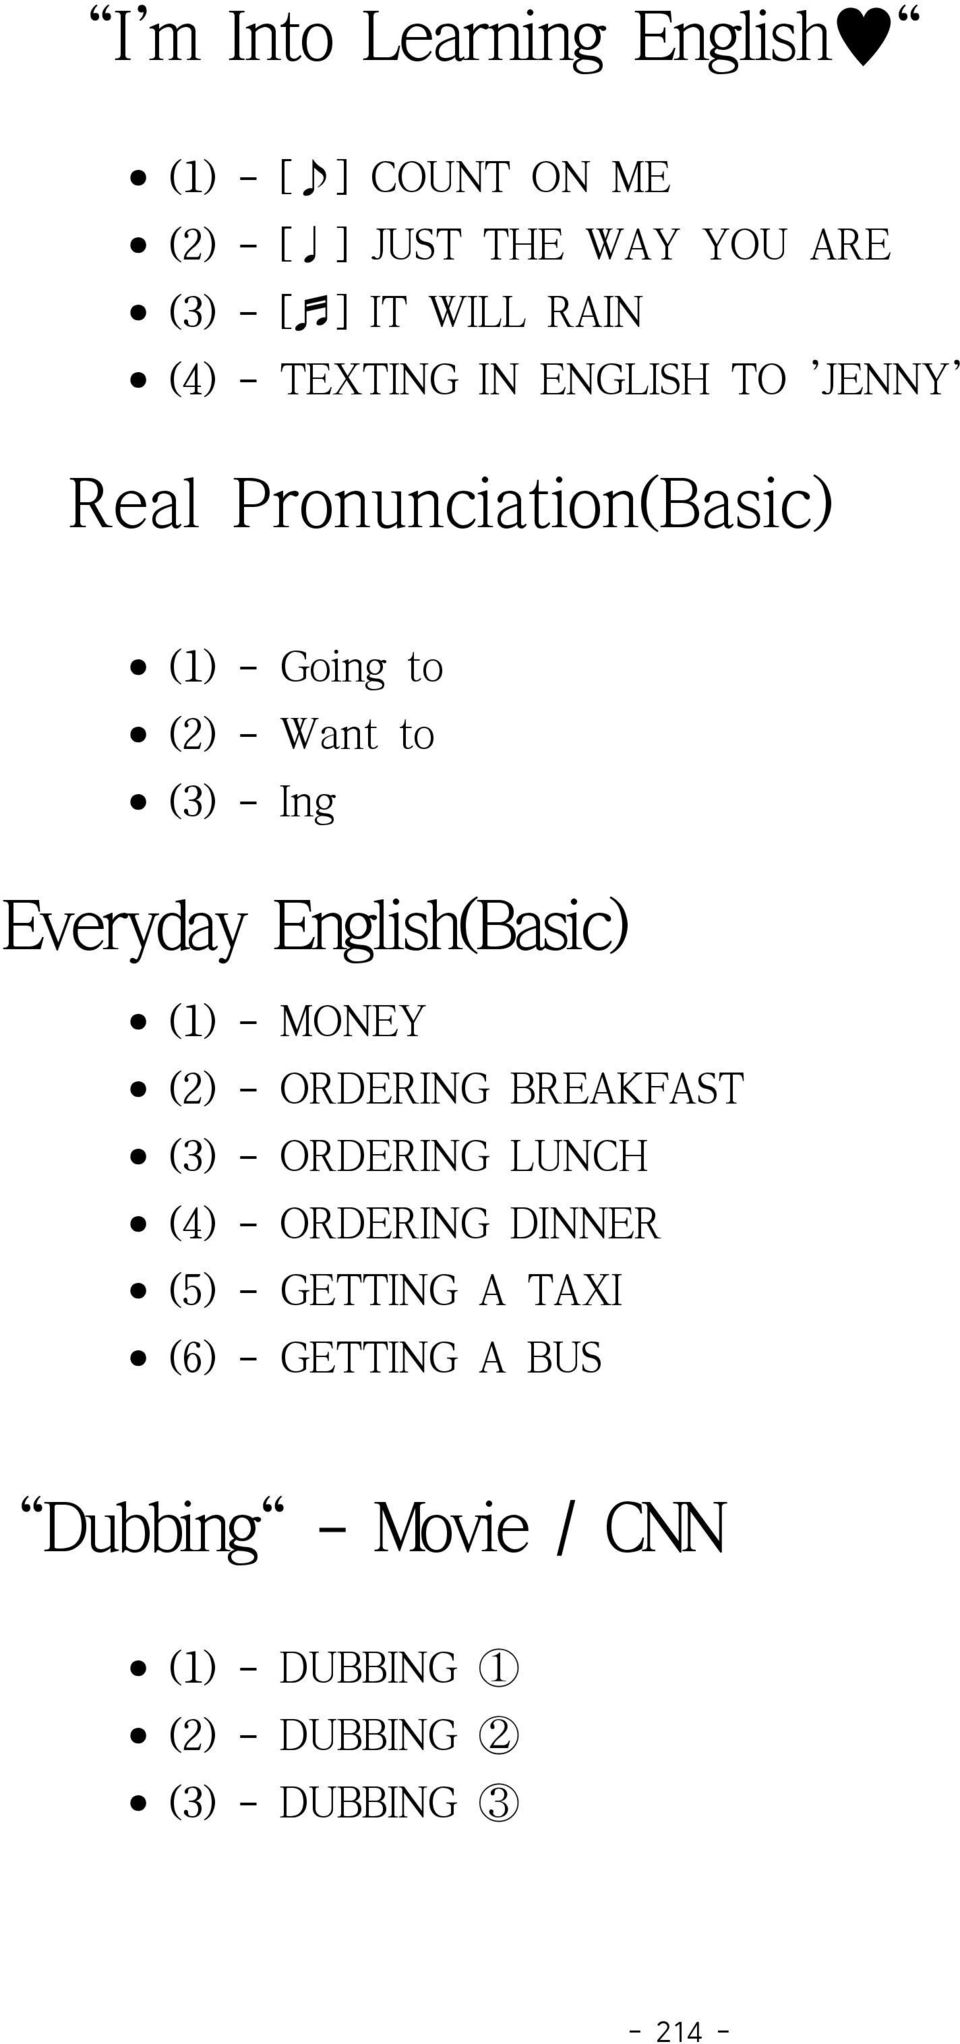 Everyday English(Basic) (1) - MONEY (2) - ORDERING BREAKFAST (3) - ORDERING LUNCH (4) - ORDERING DINNER